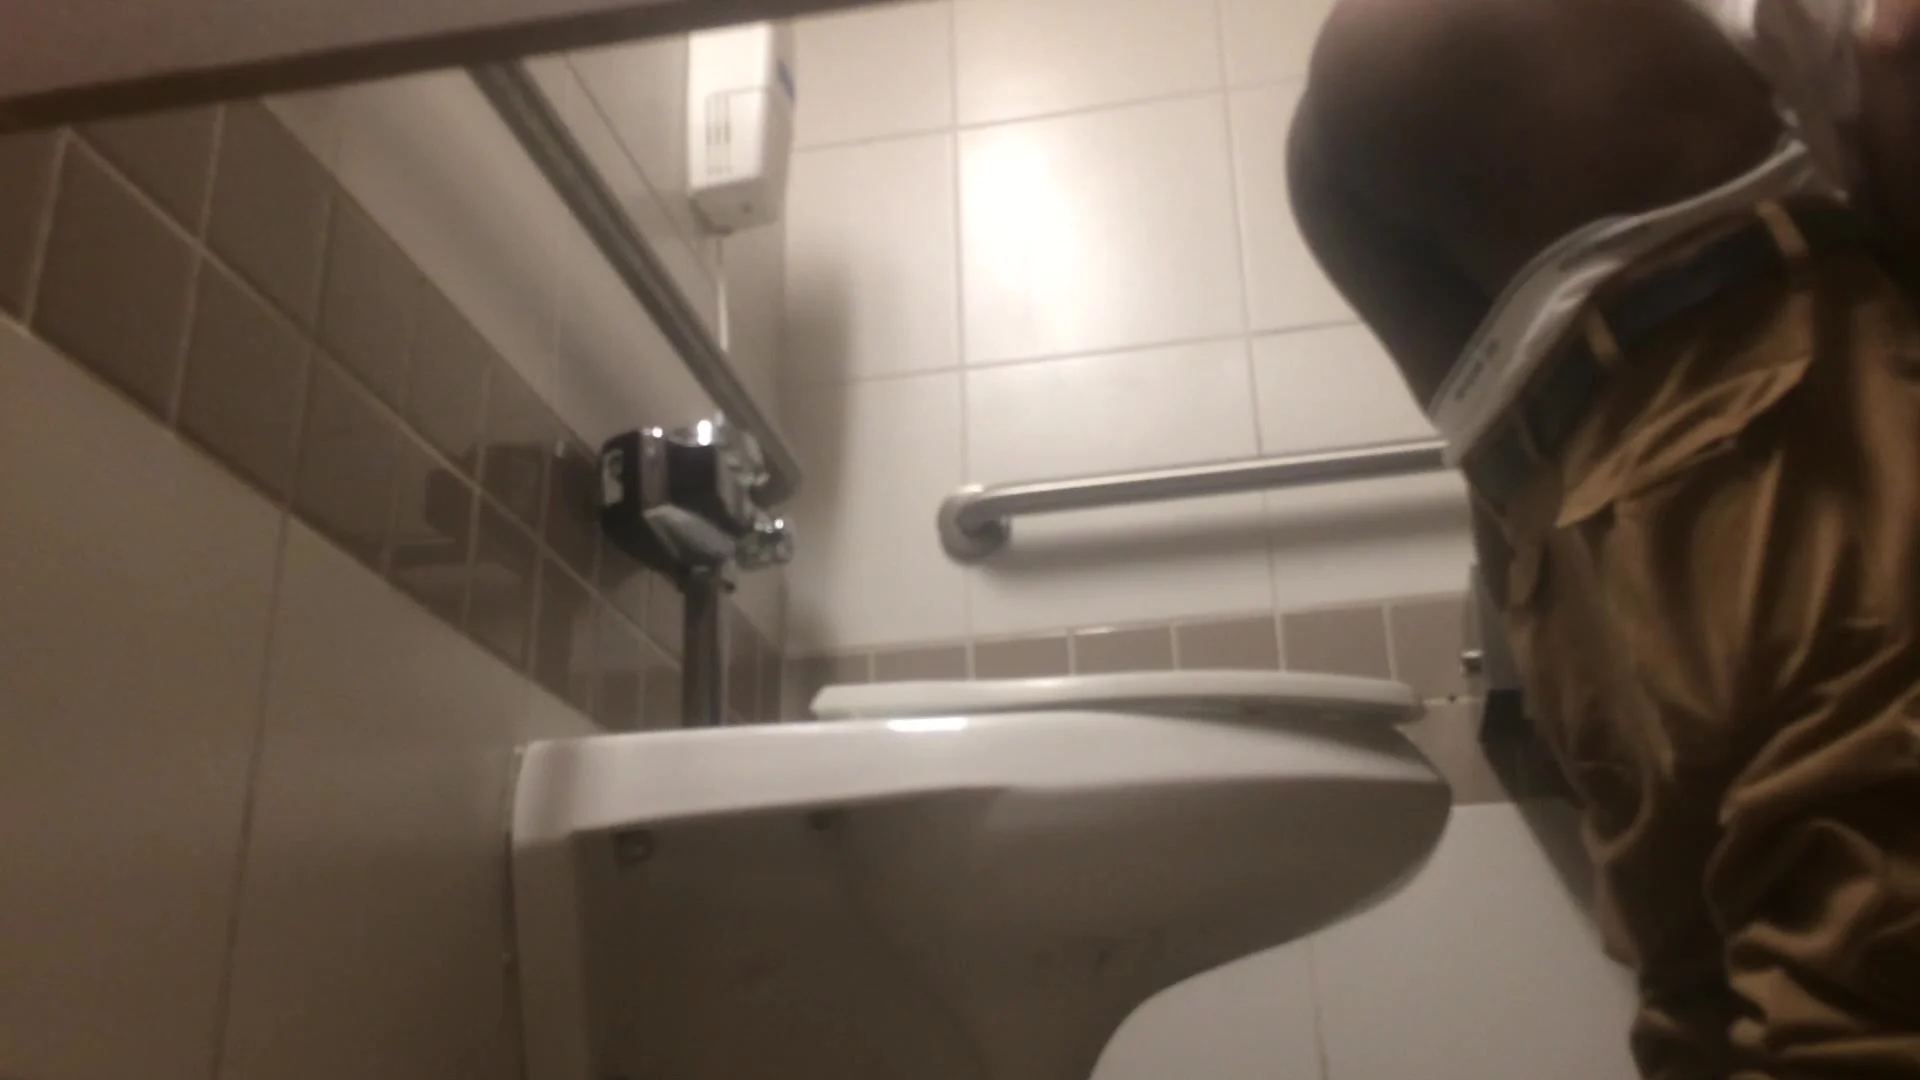 voyeur cams in mens bathrooms